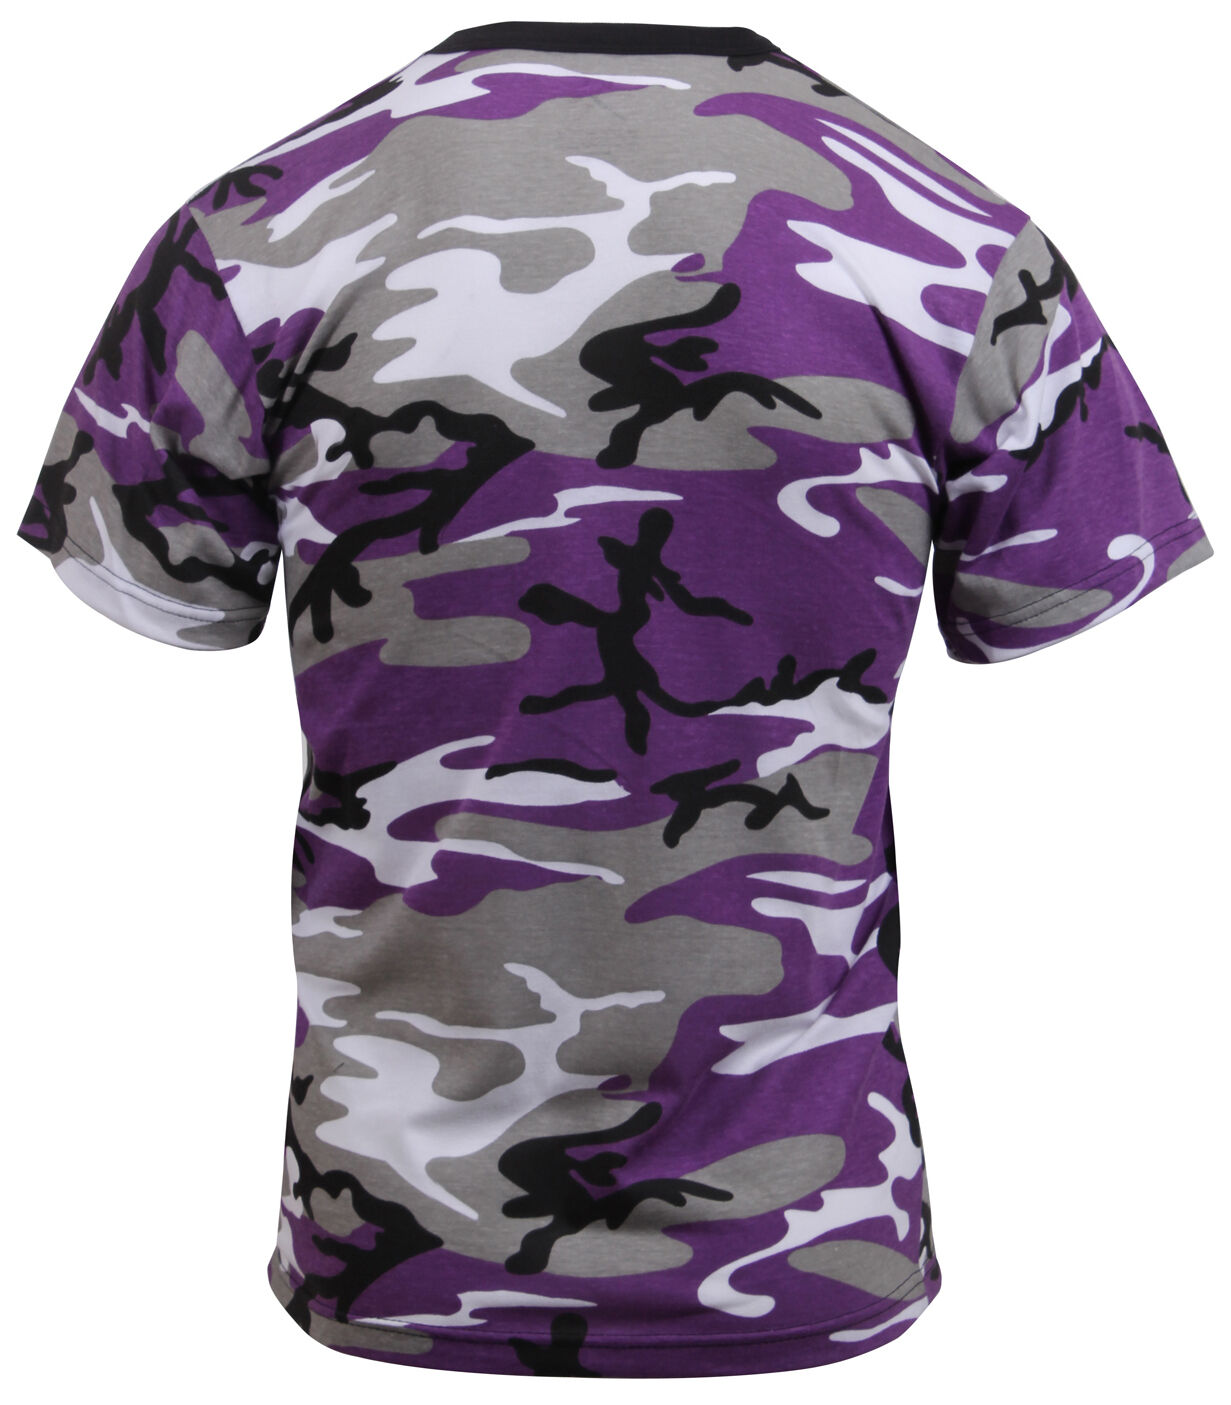 Rothco Color Camo T-Shirts - Ultra Violet Camo